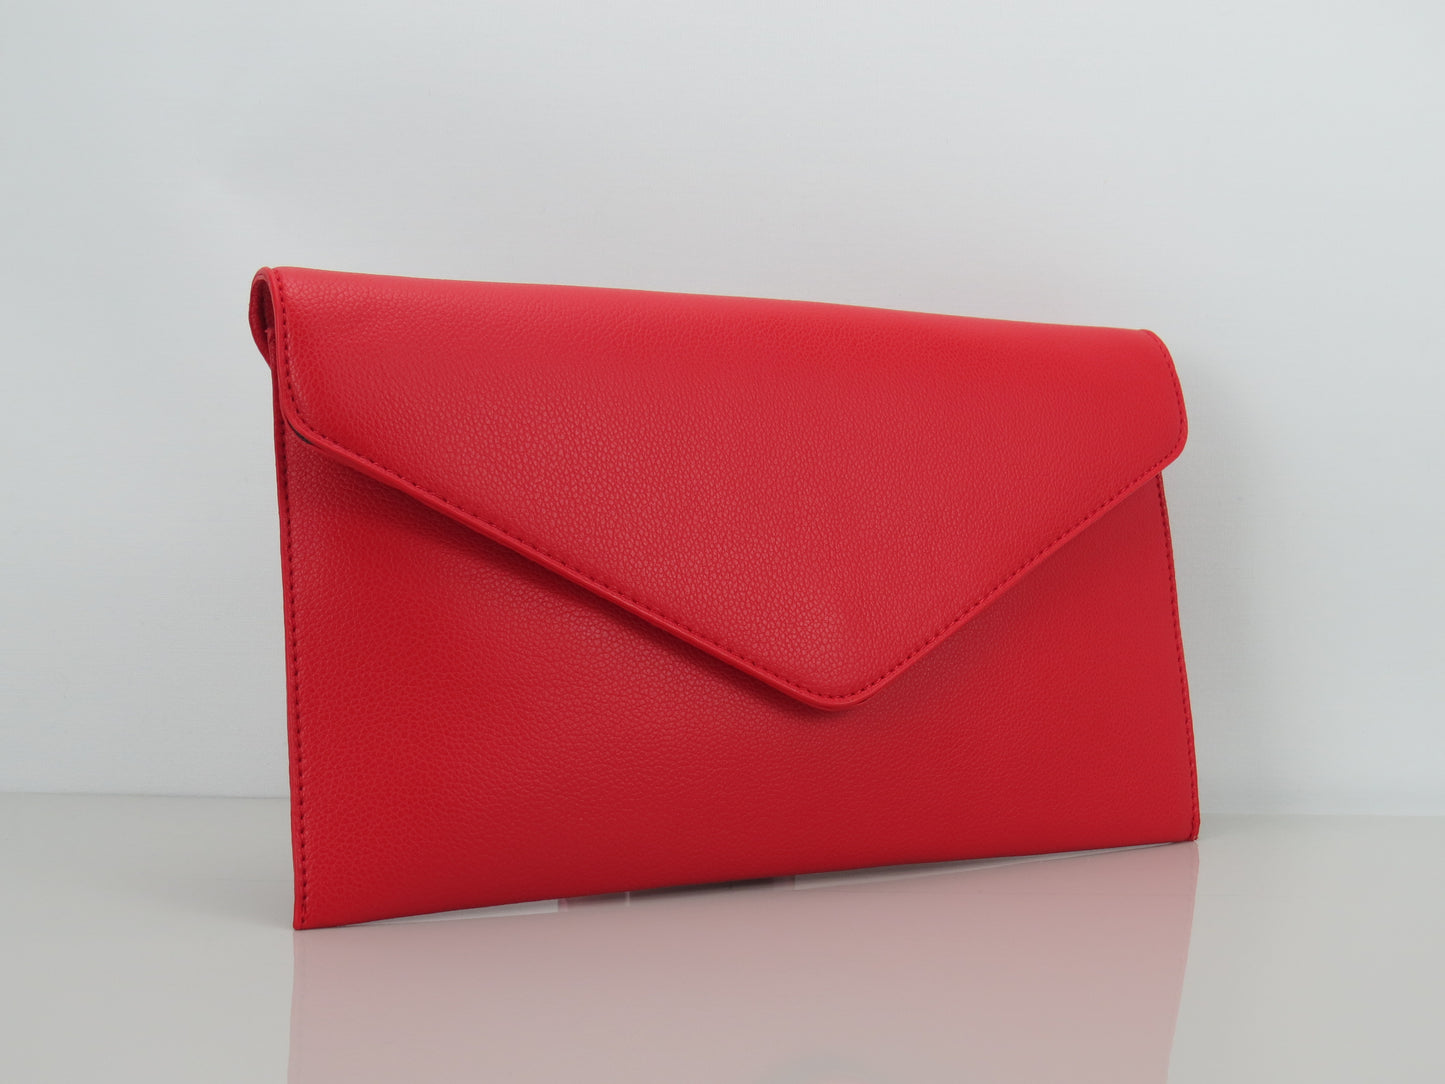 JustBagzz Original Vegan Friendly Leather Red Evening Clutch Bag